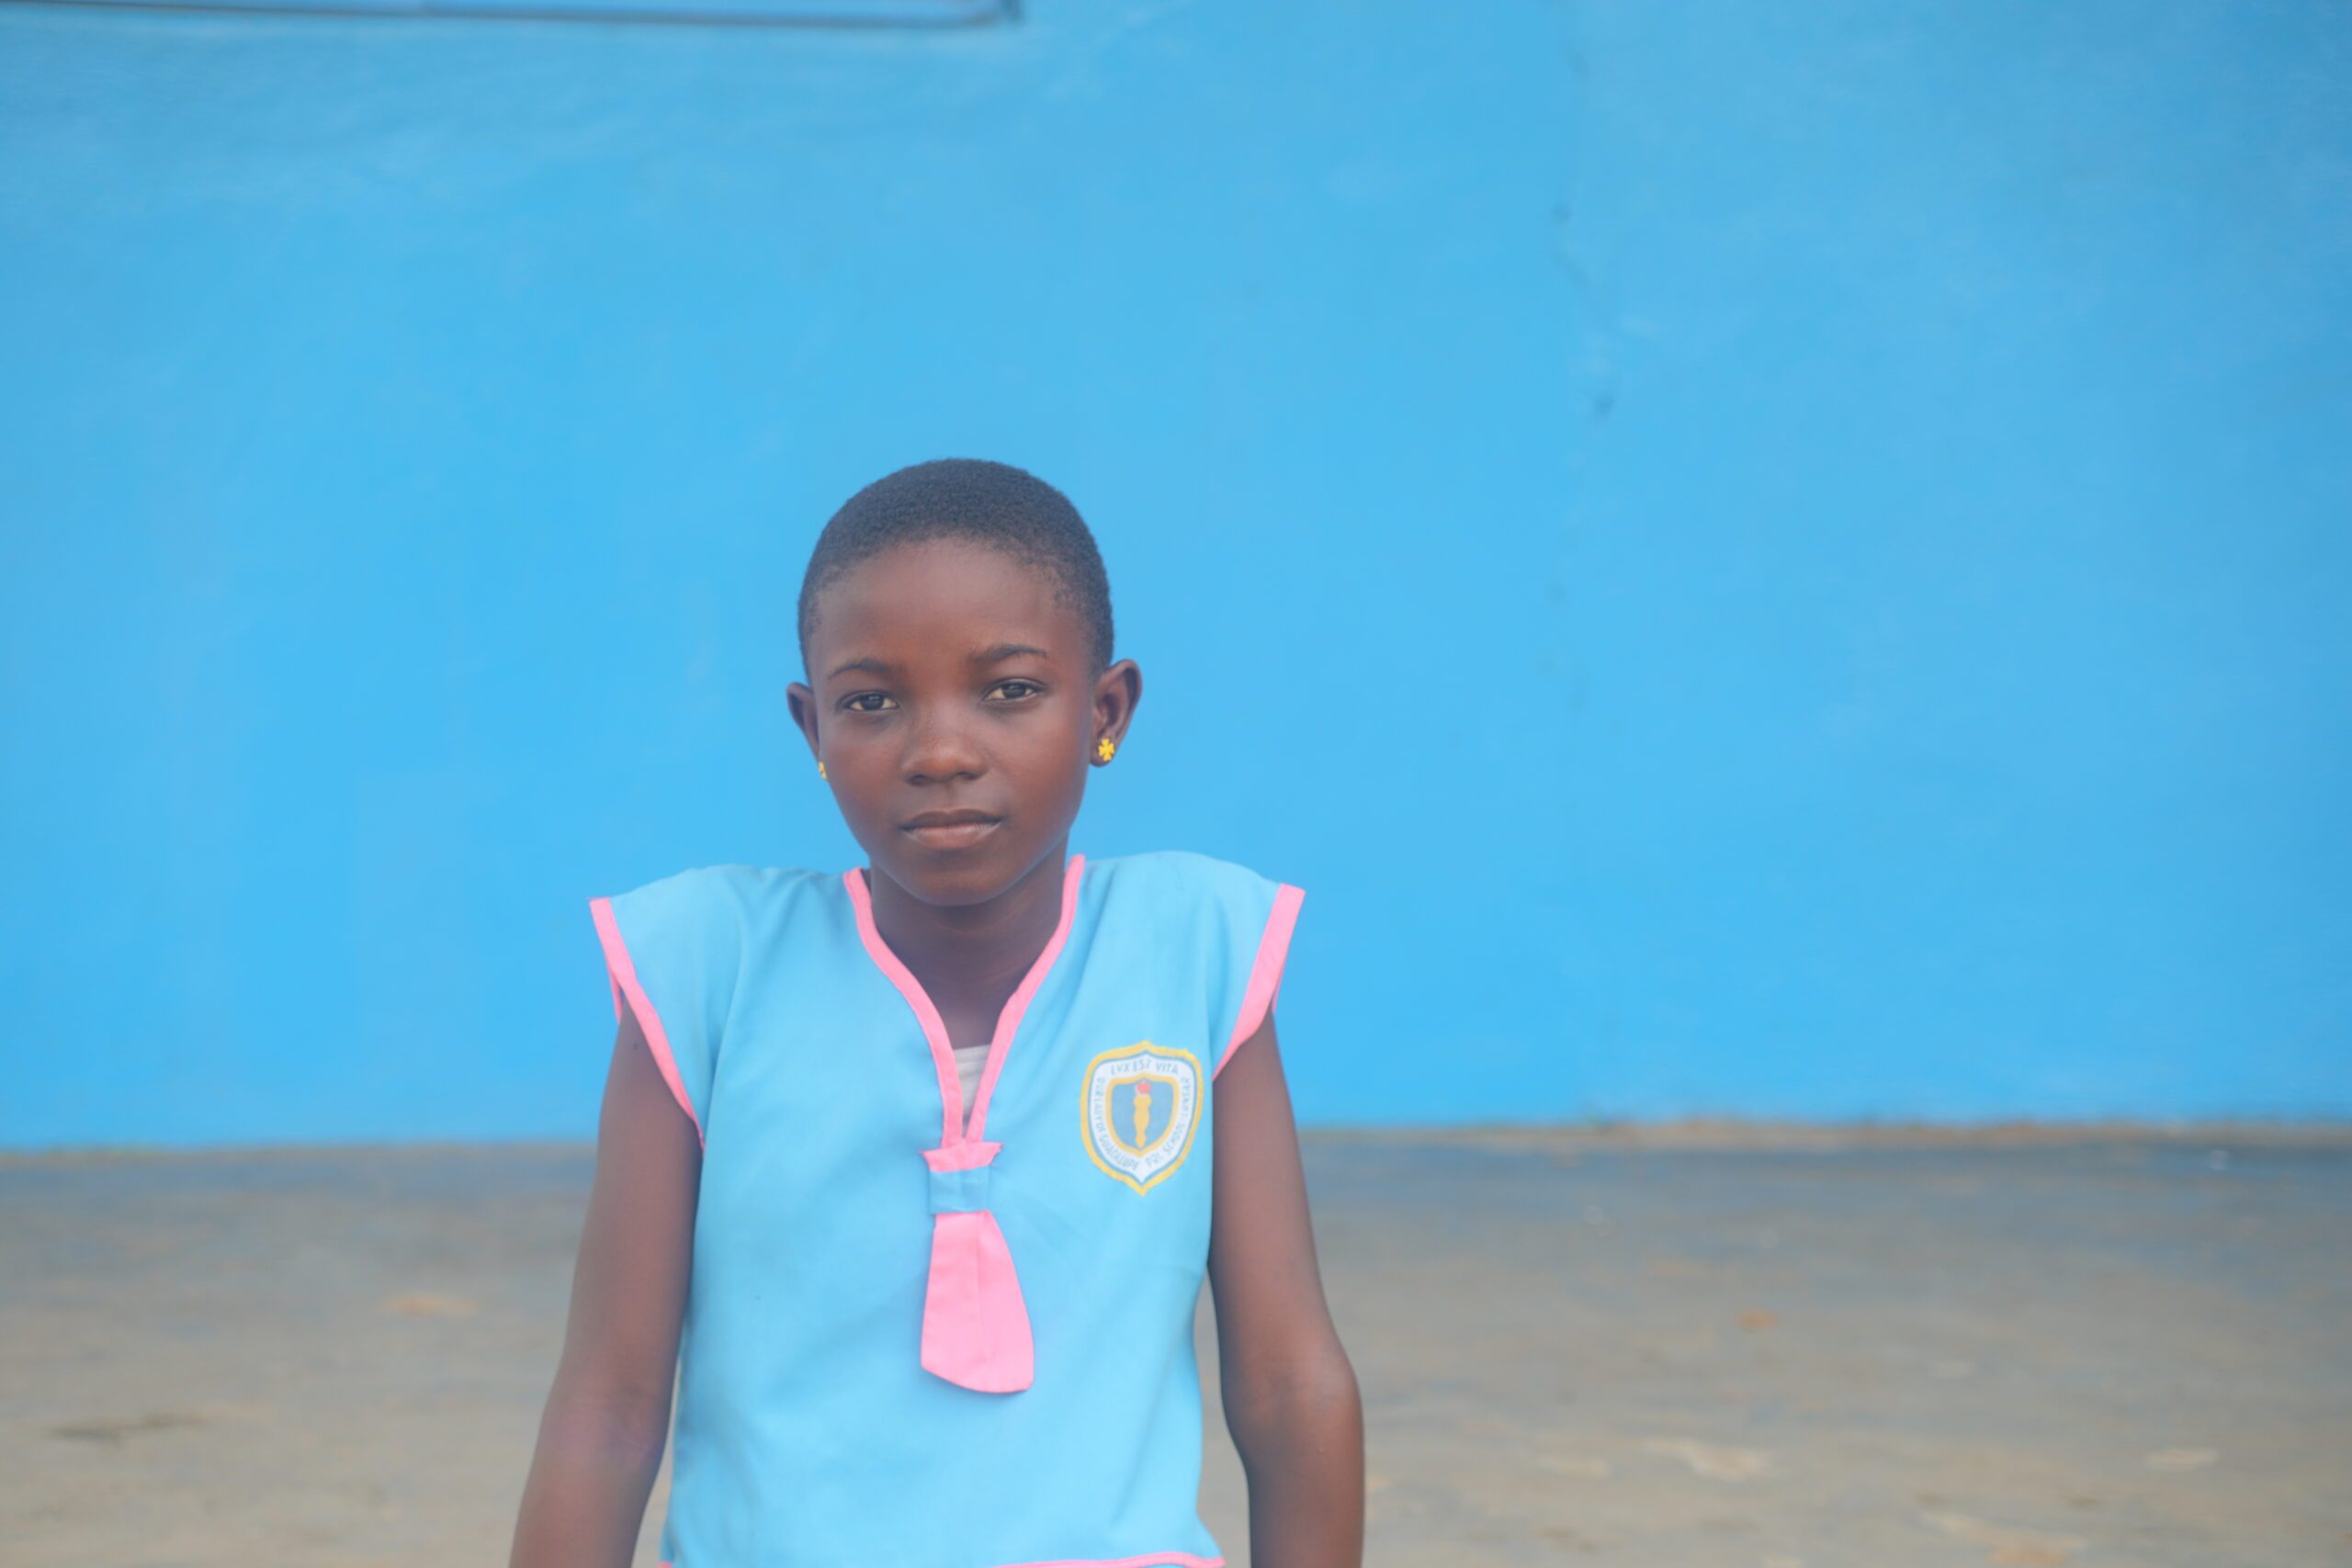 Haja at school in Sierra Leone